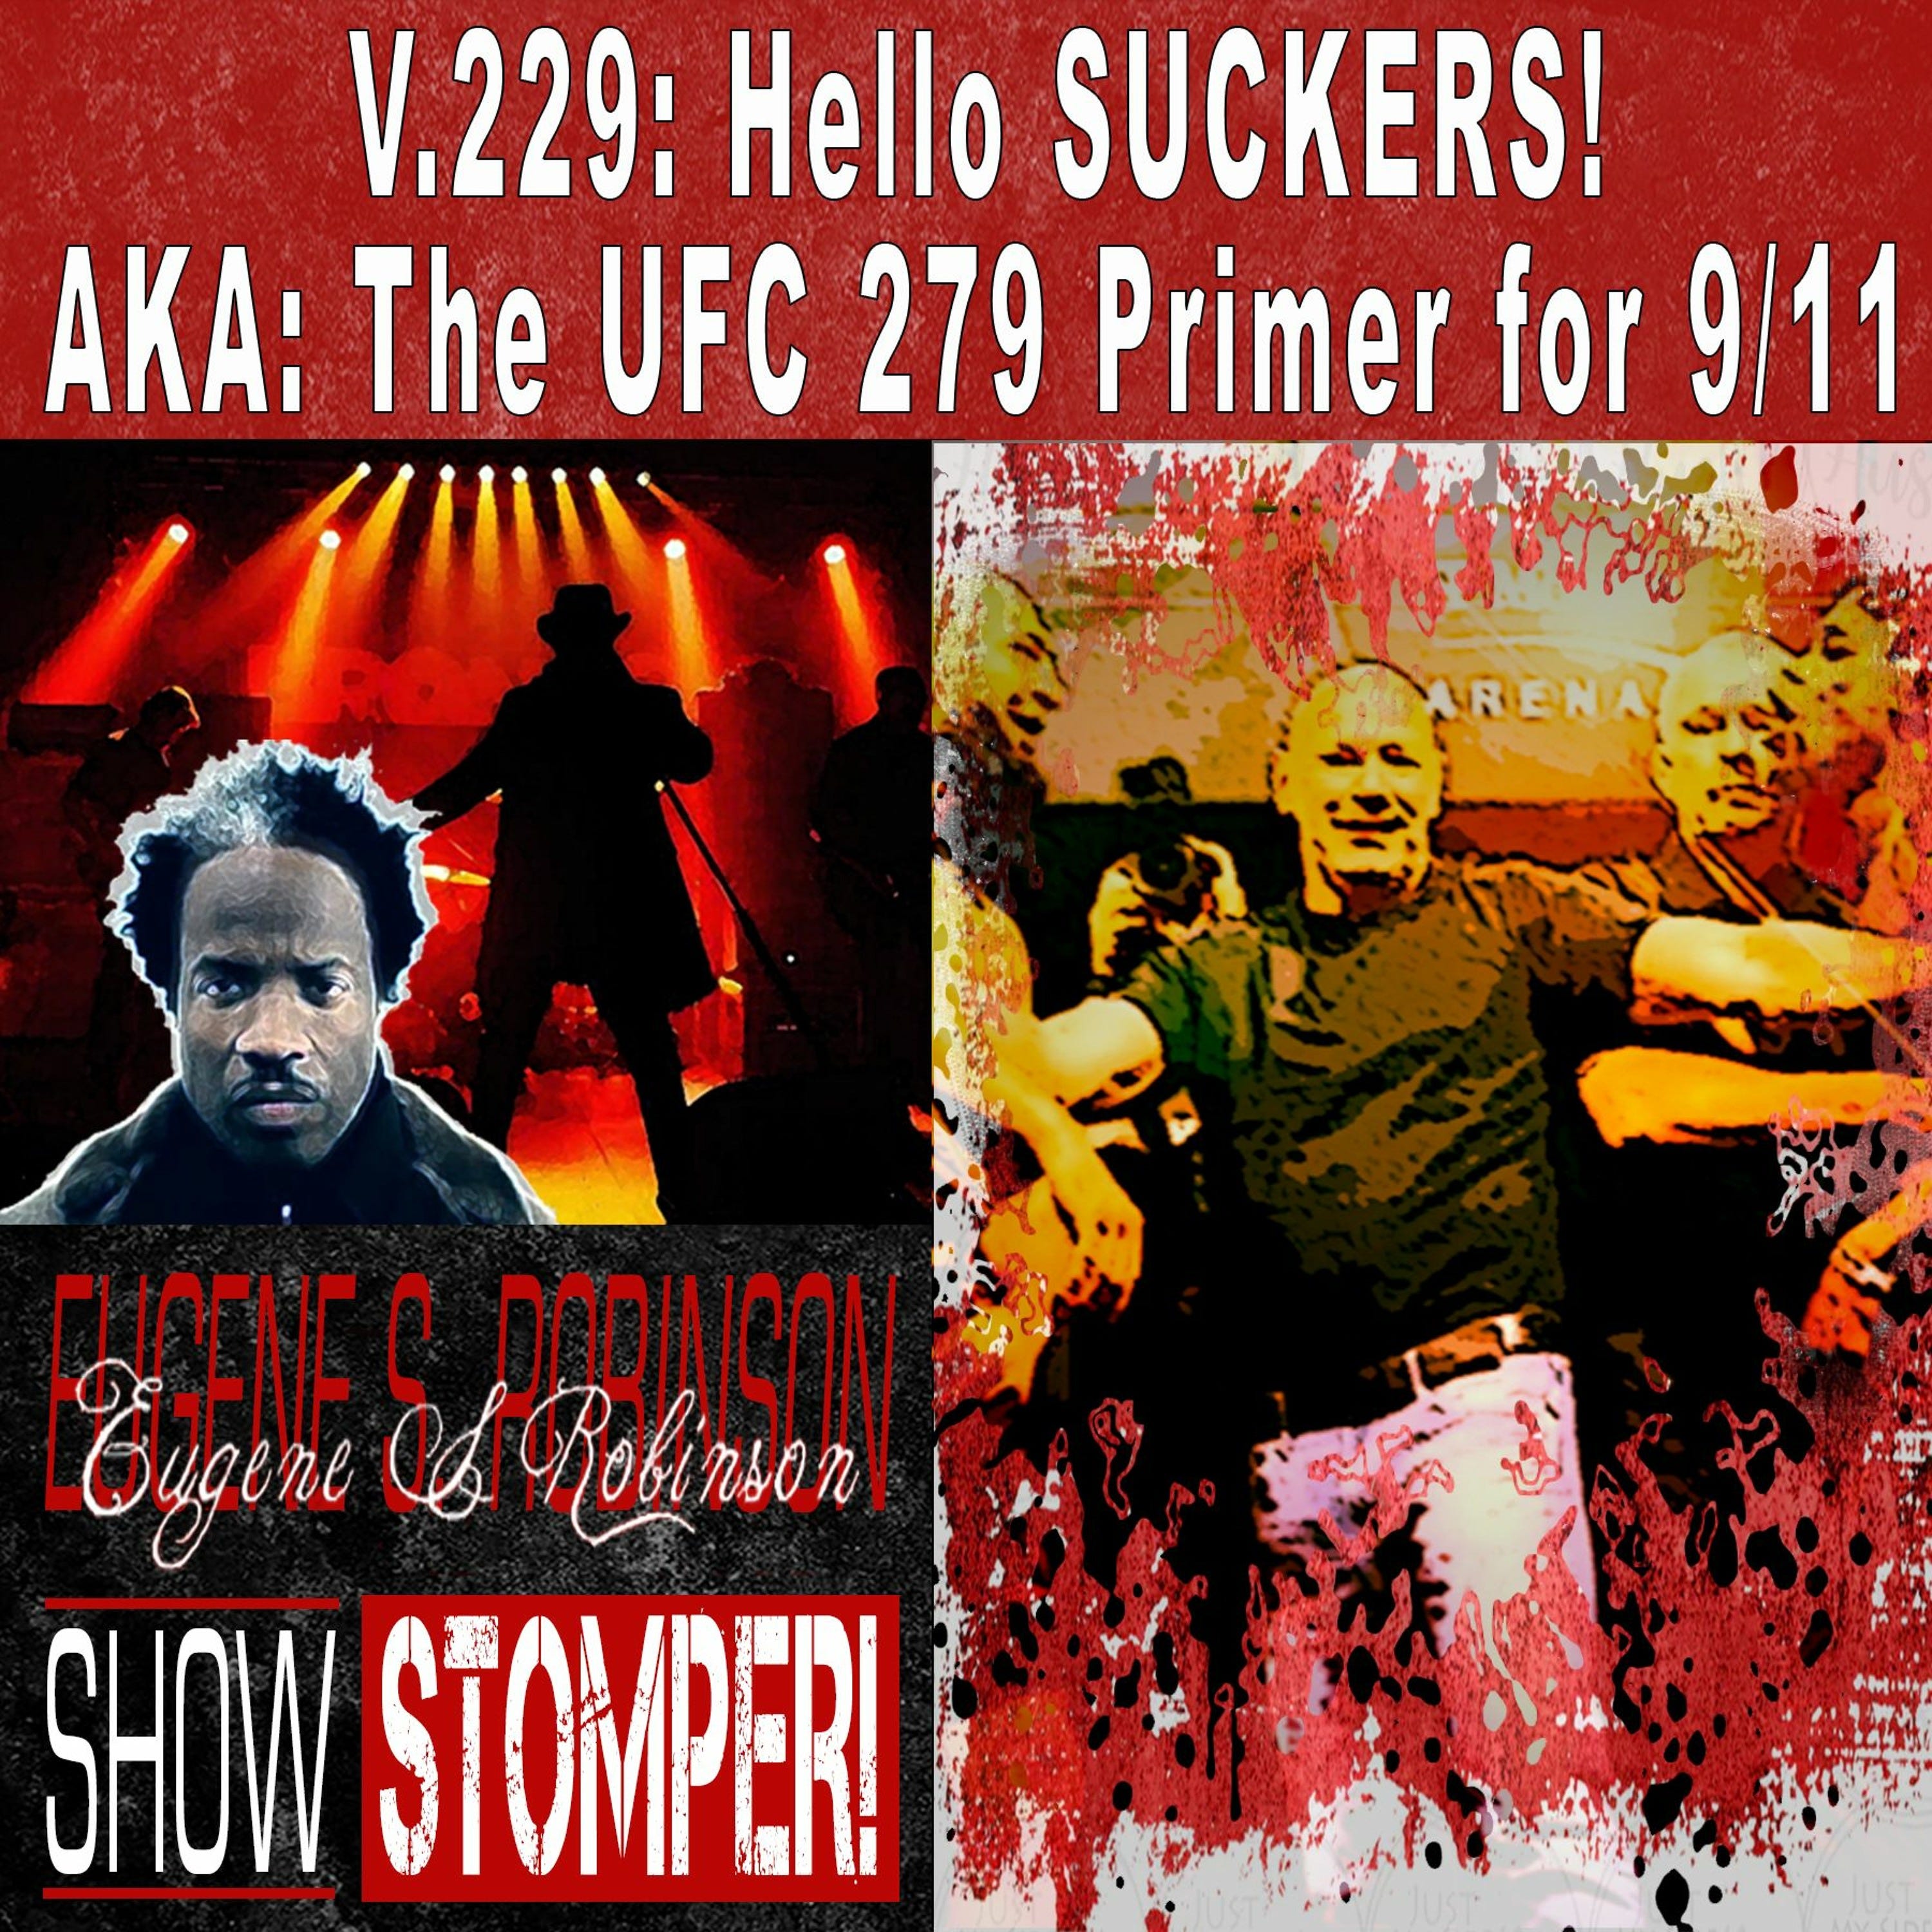 V.229: Hello SUCKERS! AKA: The UFC 279 Primer for 9/11 On The Eugene S. Robinson Show Stomper!